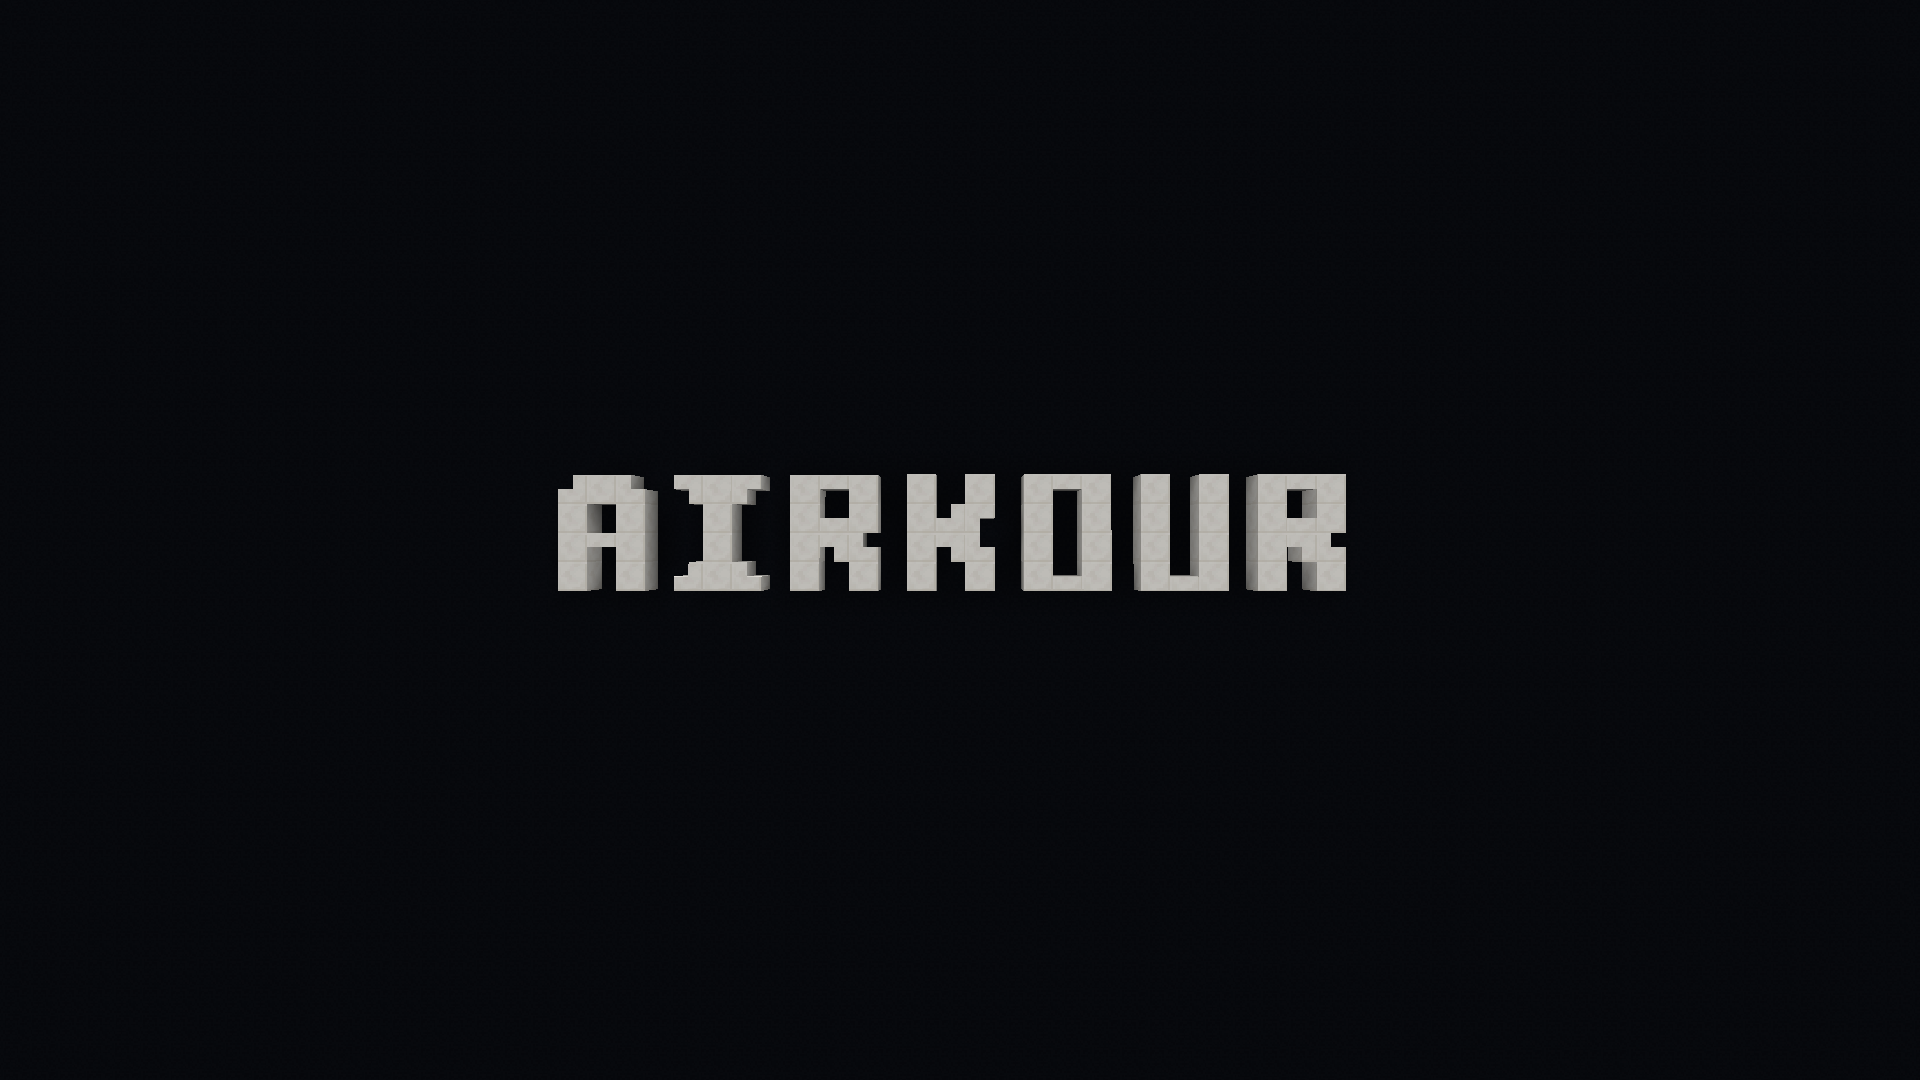 Tải về Airkour cho Minecraft 1.14.4